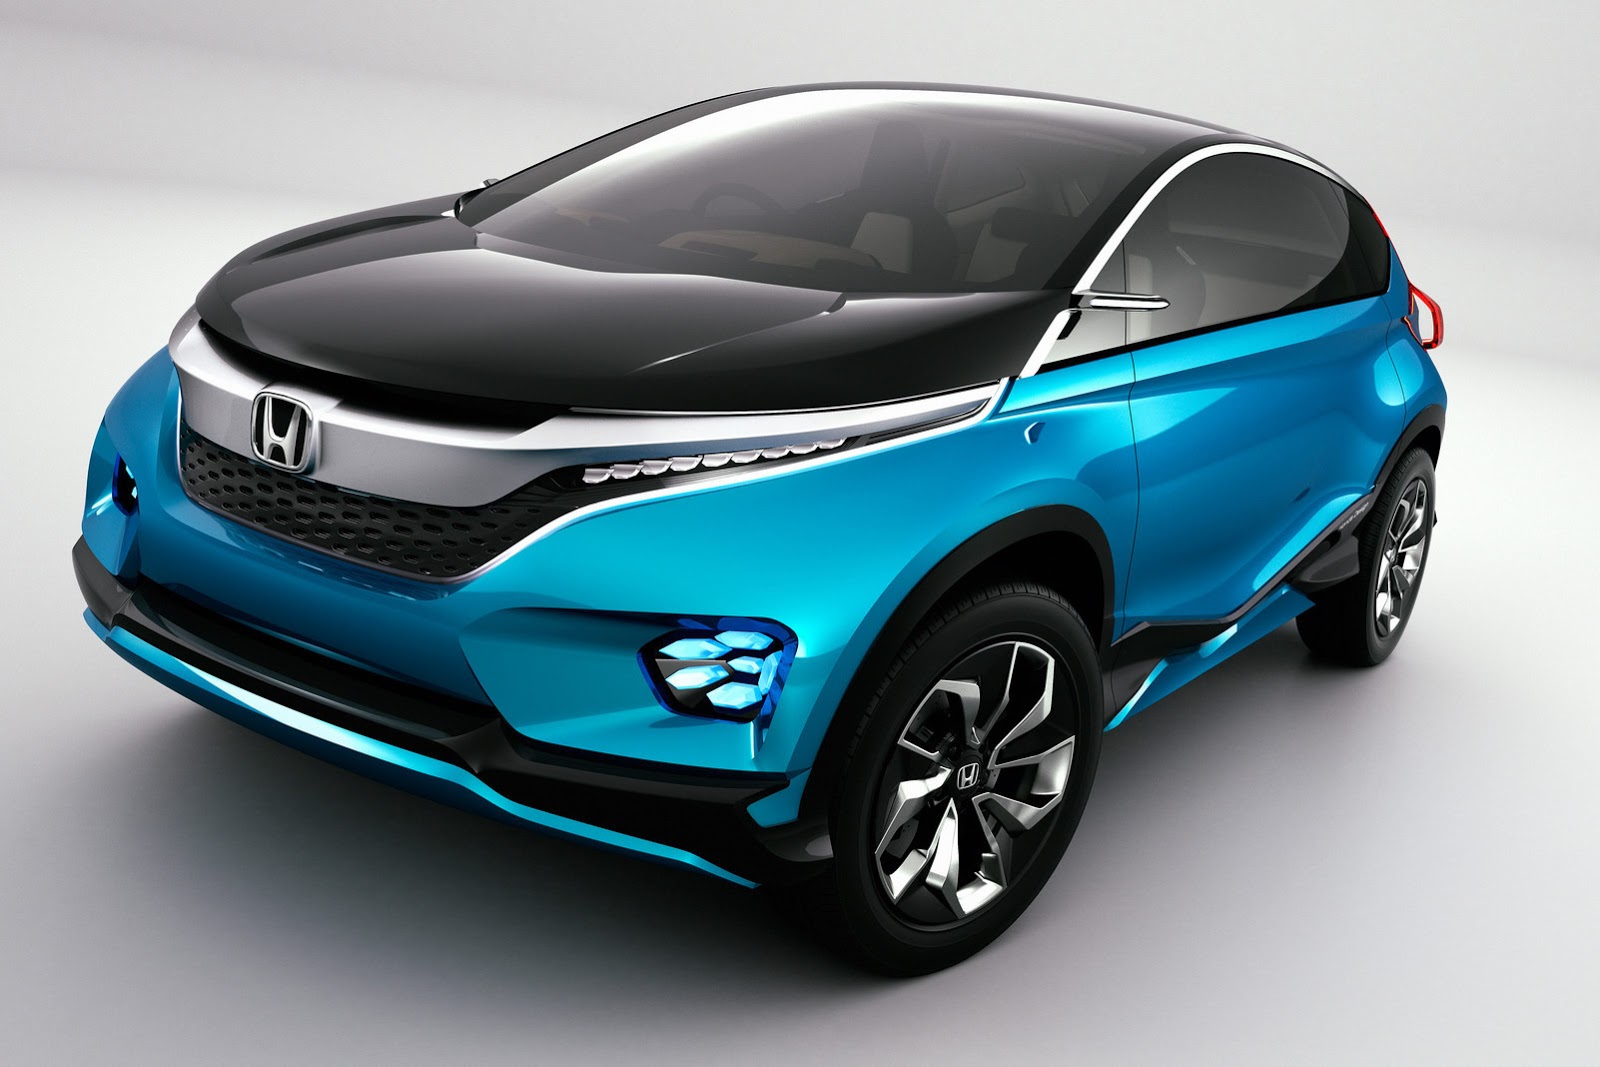 Honda XS 1 Concept Unveiled at 2014 New Delhi Auto Expo 